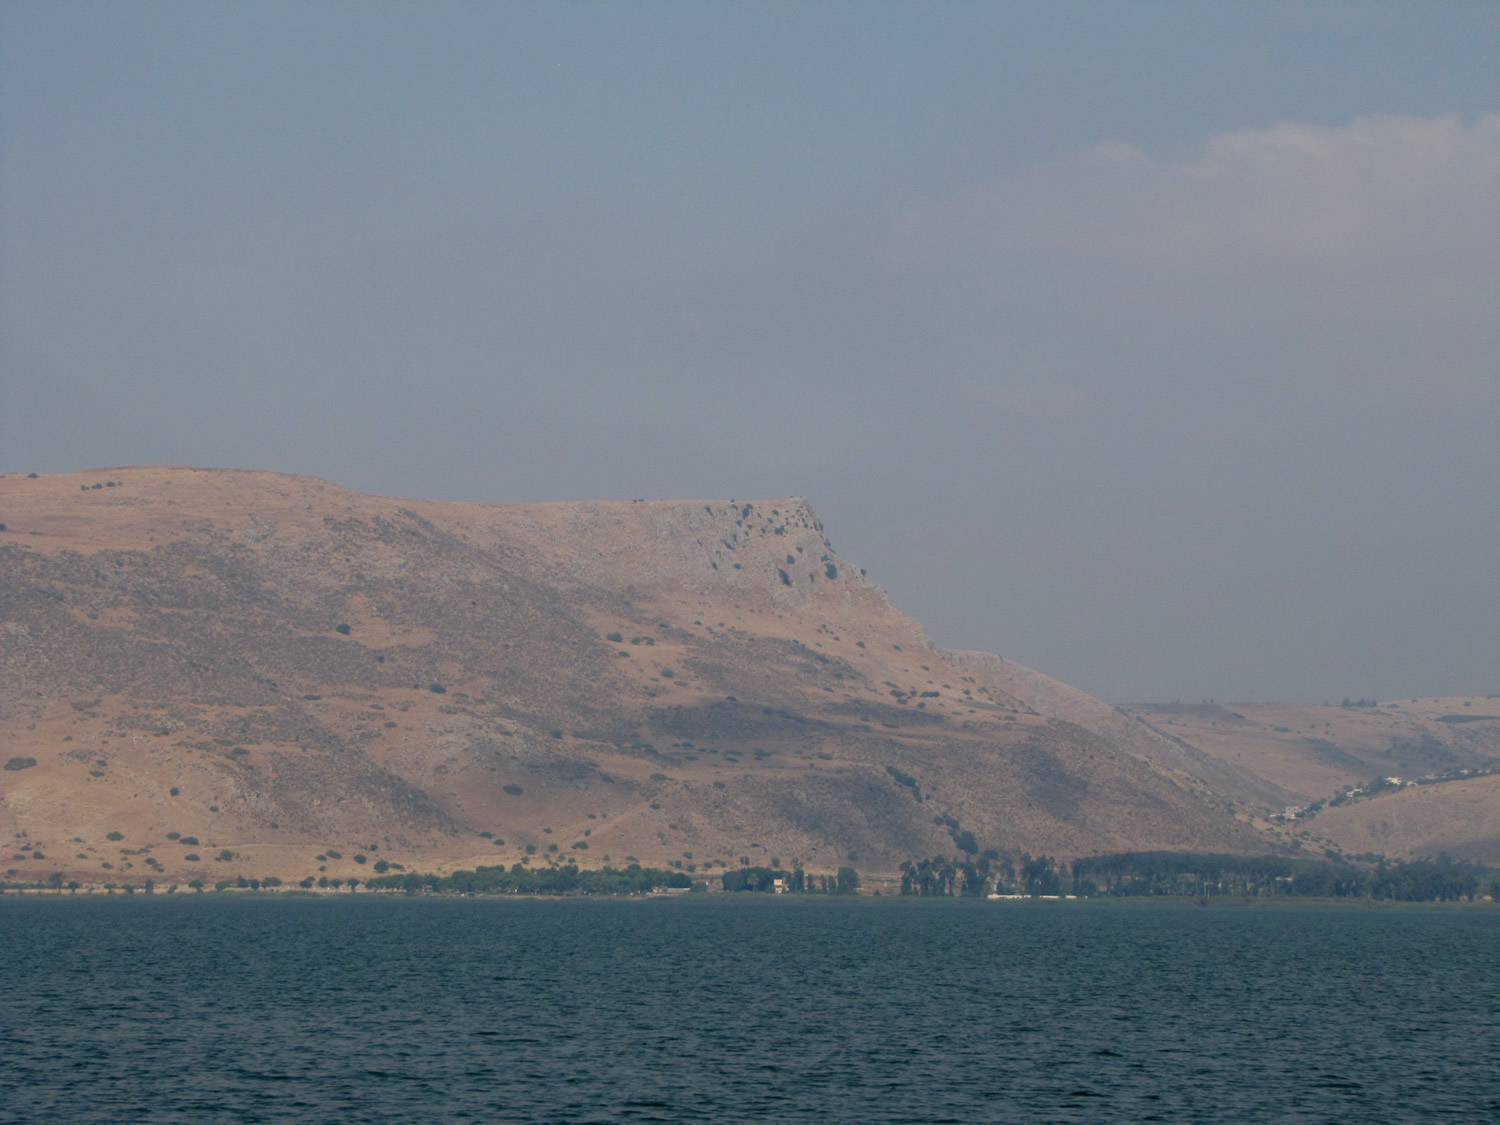 Sea of Galilee, Mount Arbel